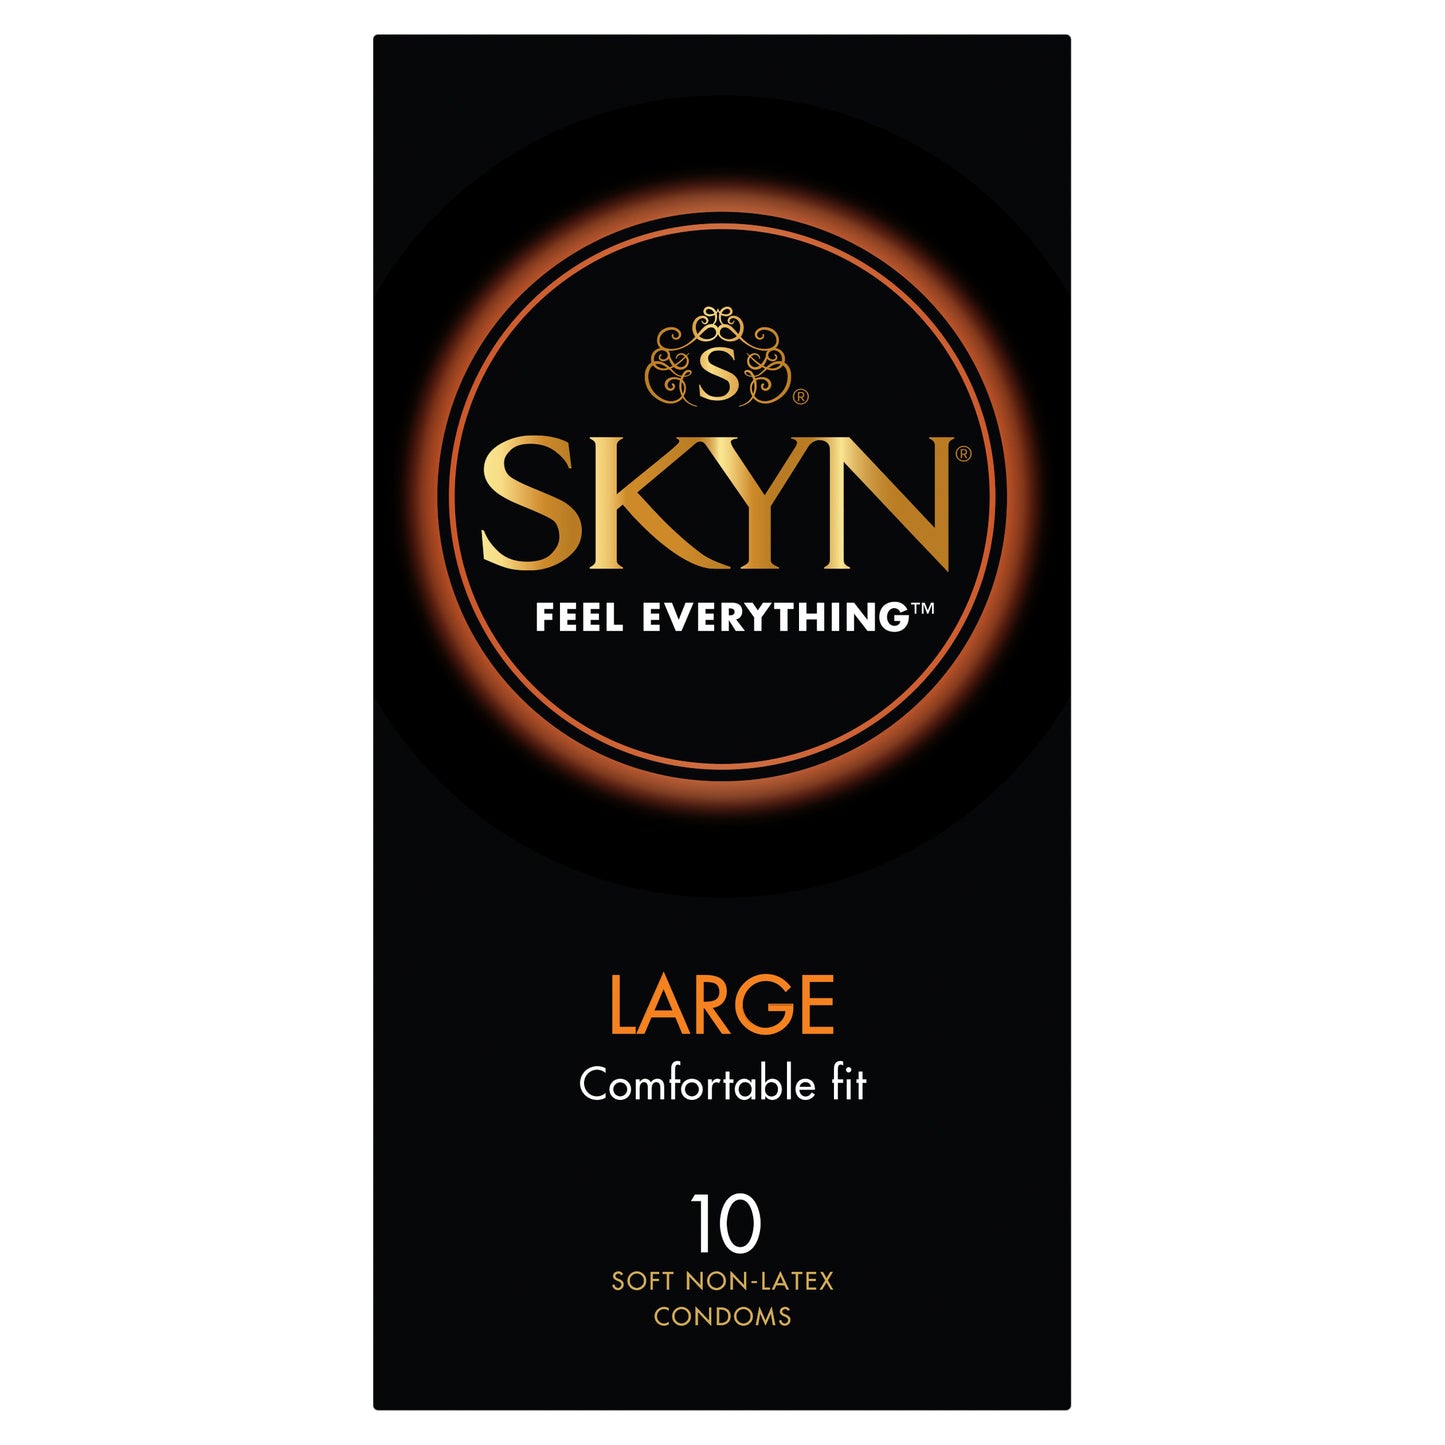 SKYN Large Condoms - 10